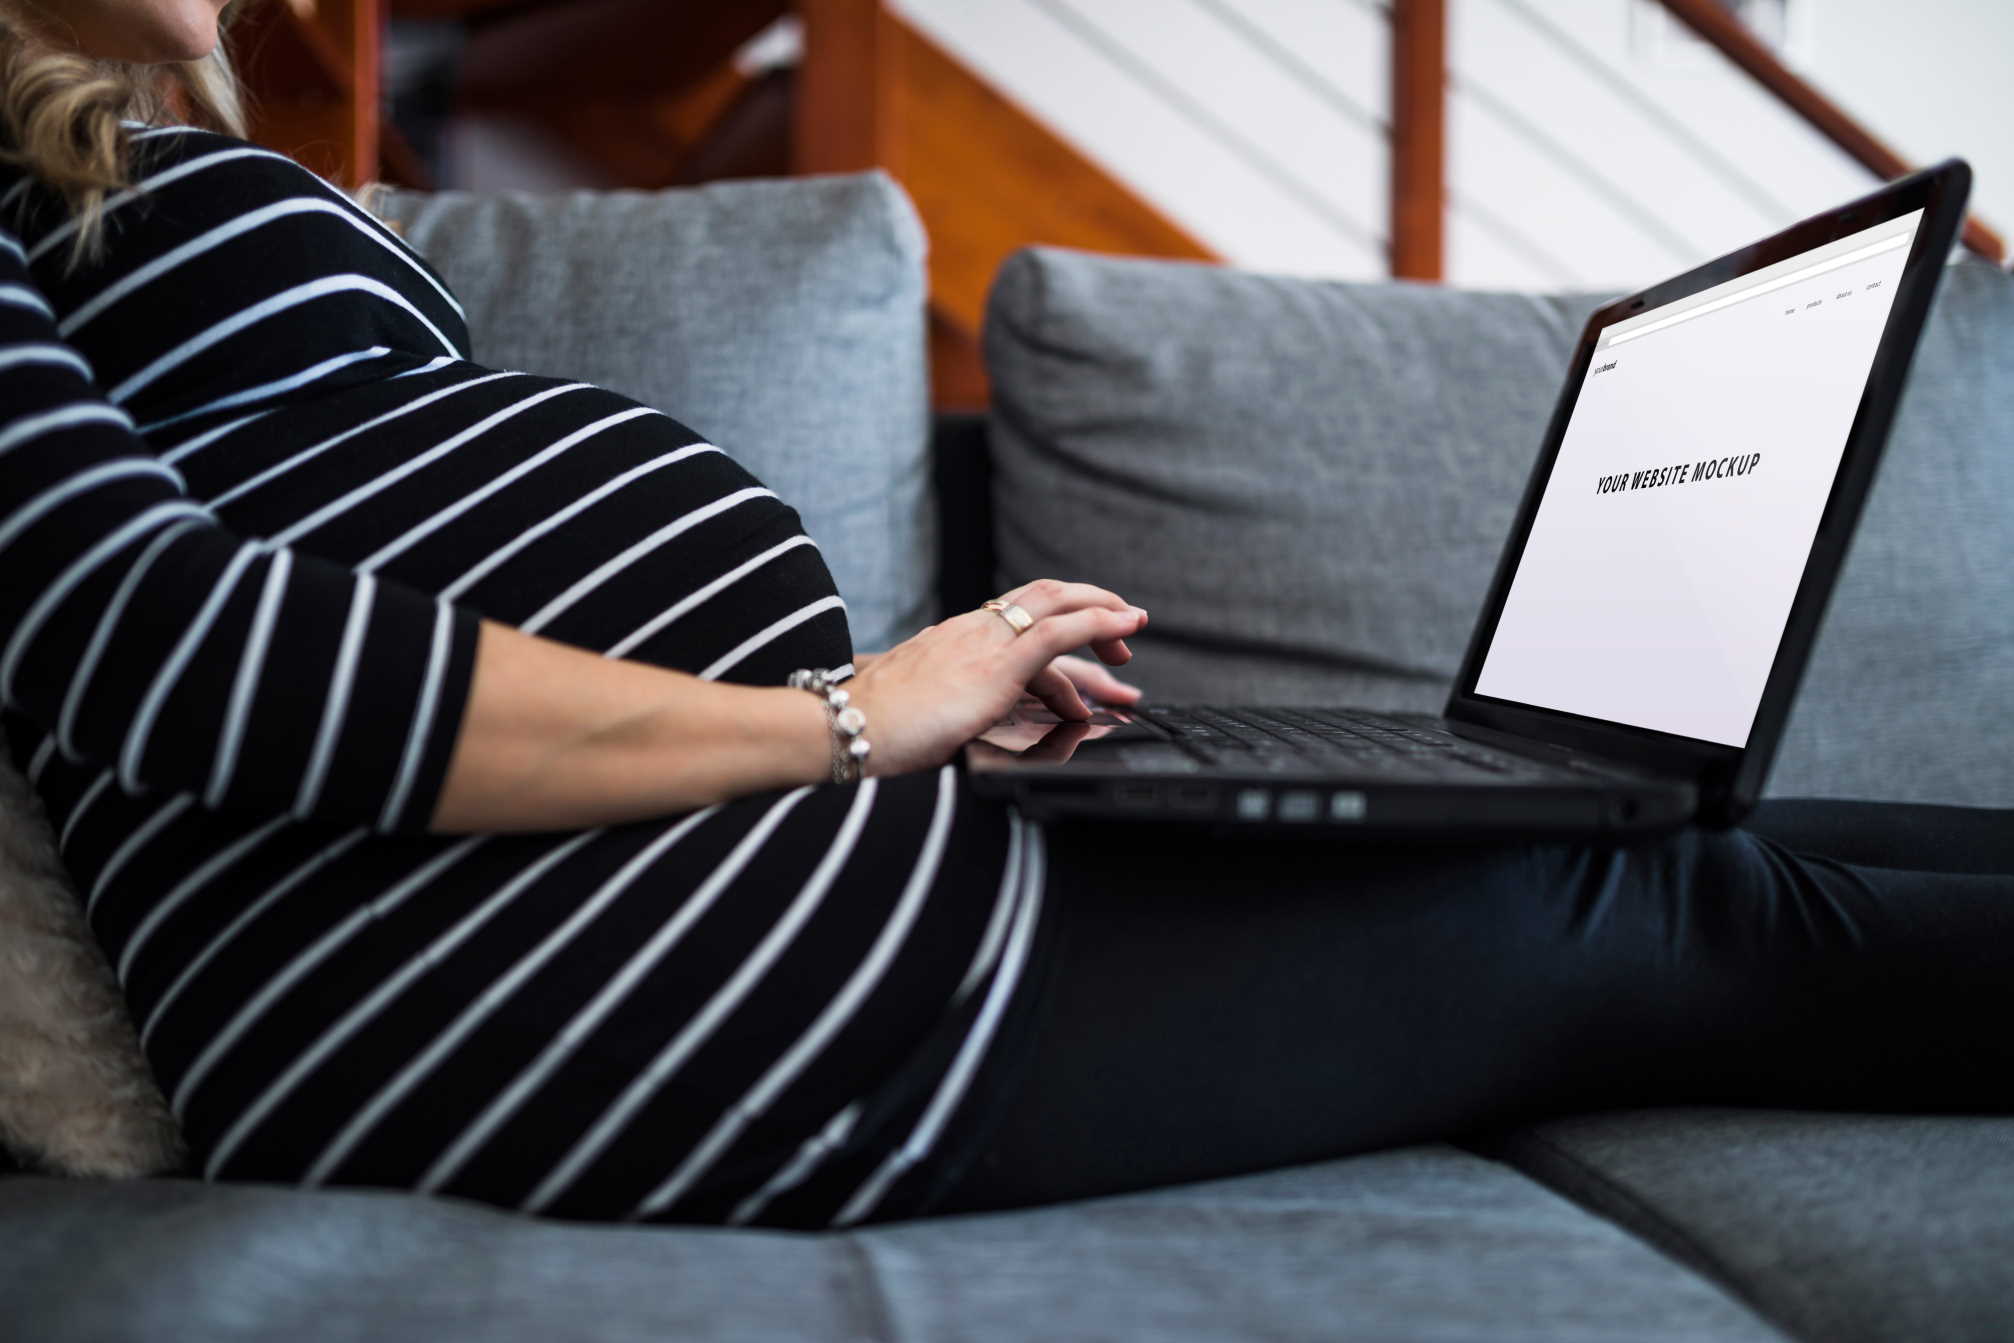 Besplatna online edukacija za trudnice i dojilje: "Zdrava mama, sretna beba"!